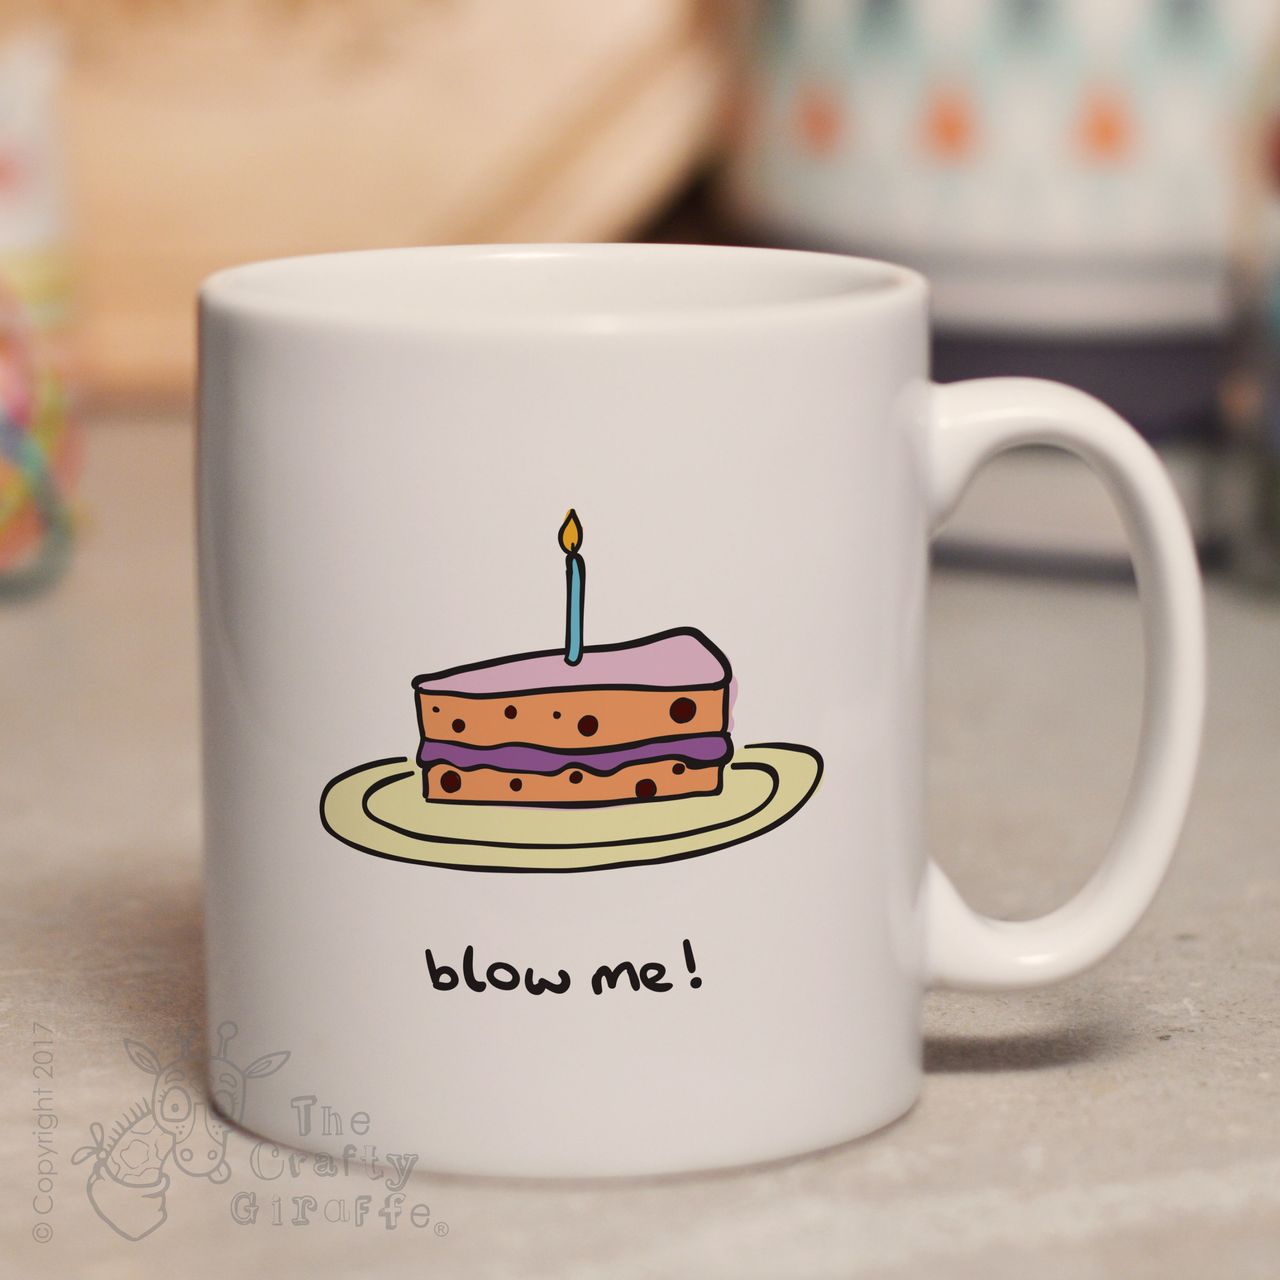 Blow me mug